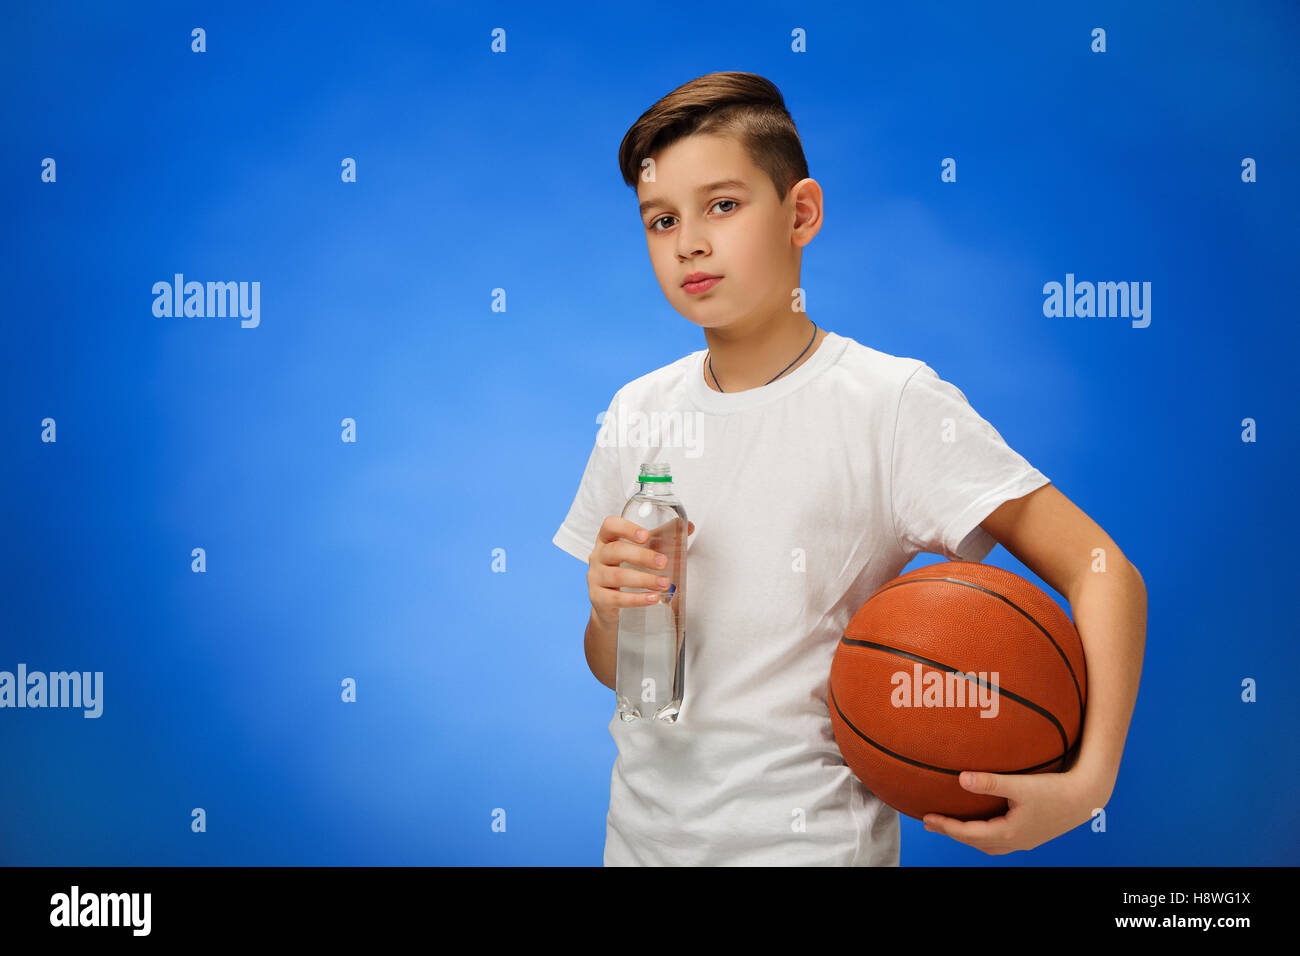 Entzückenden 11-jährige junge Kind mit Basketball ball Stockfotografie -  Alamy